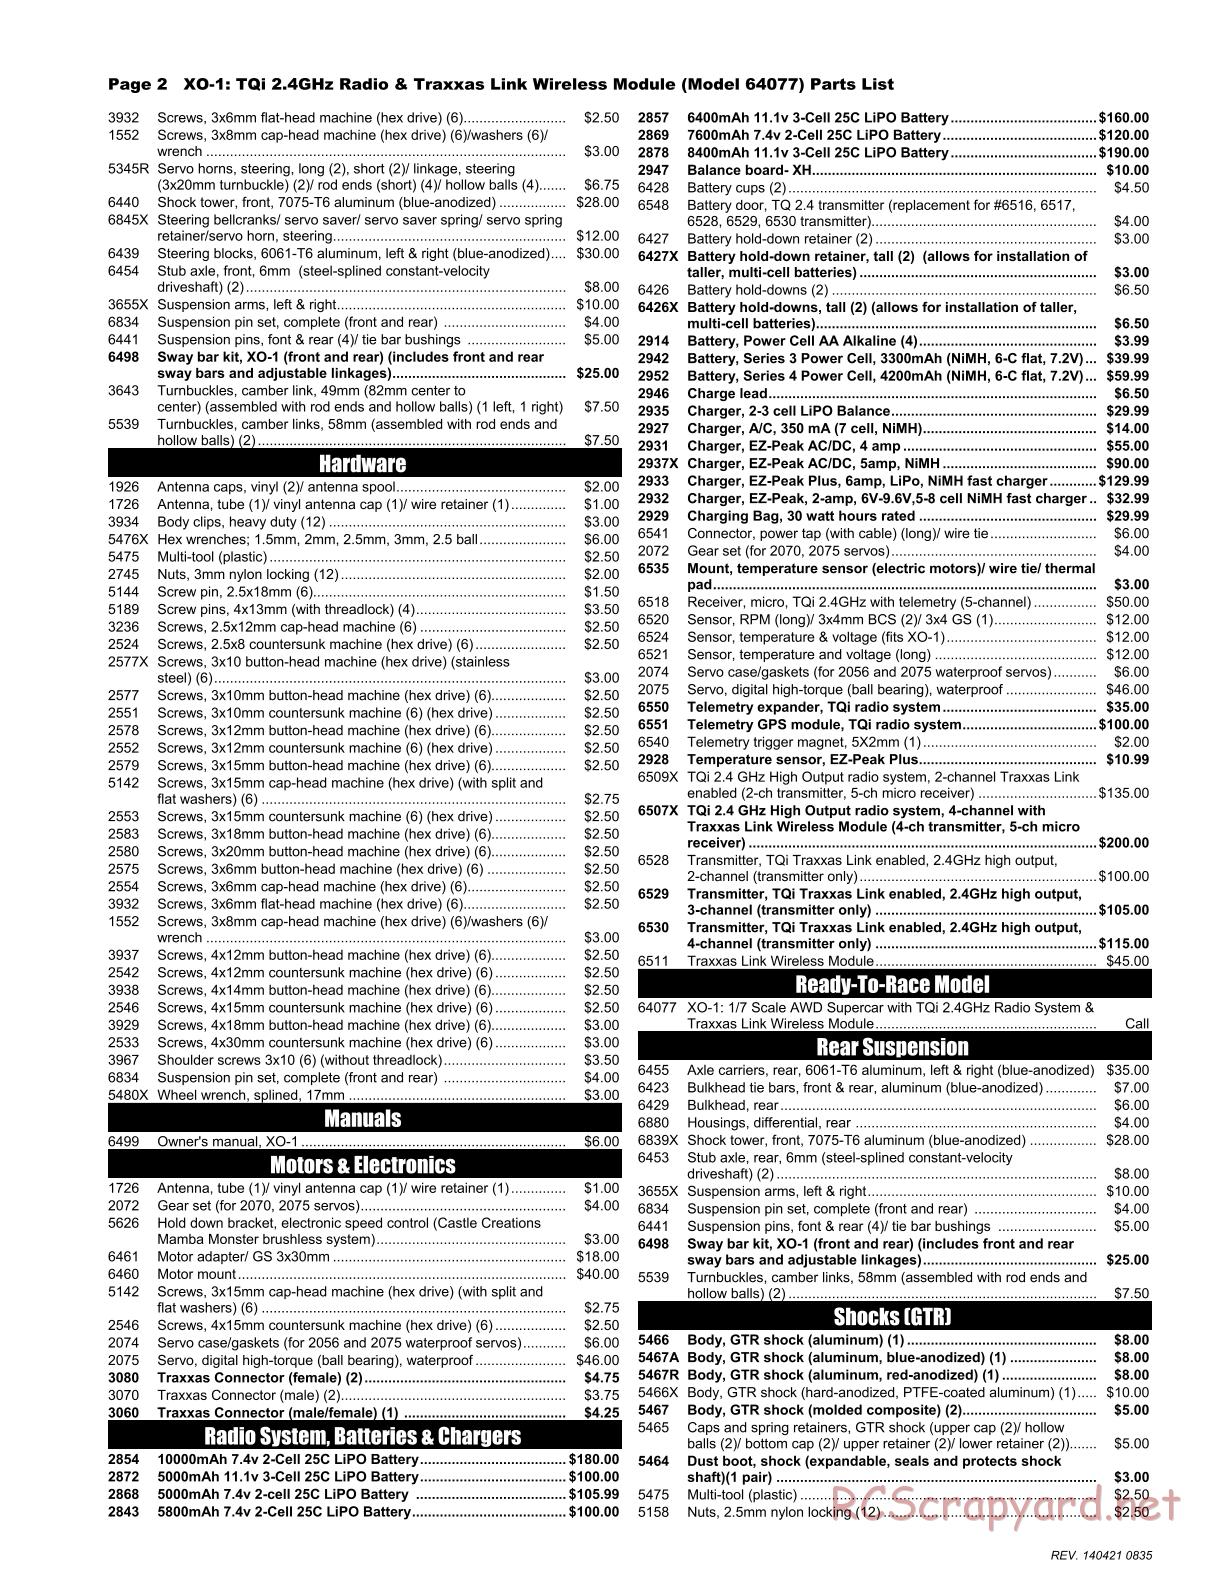 Traxxas - XO-1 (2014) - Parts List - Page 2